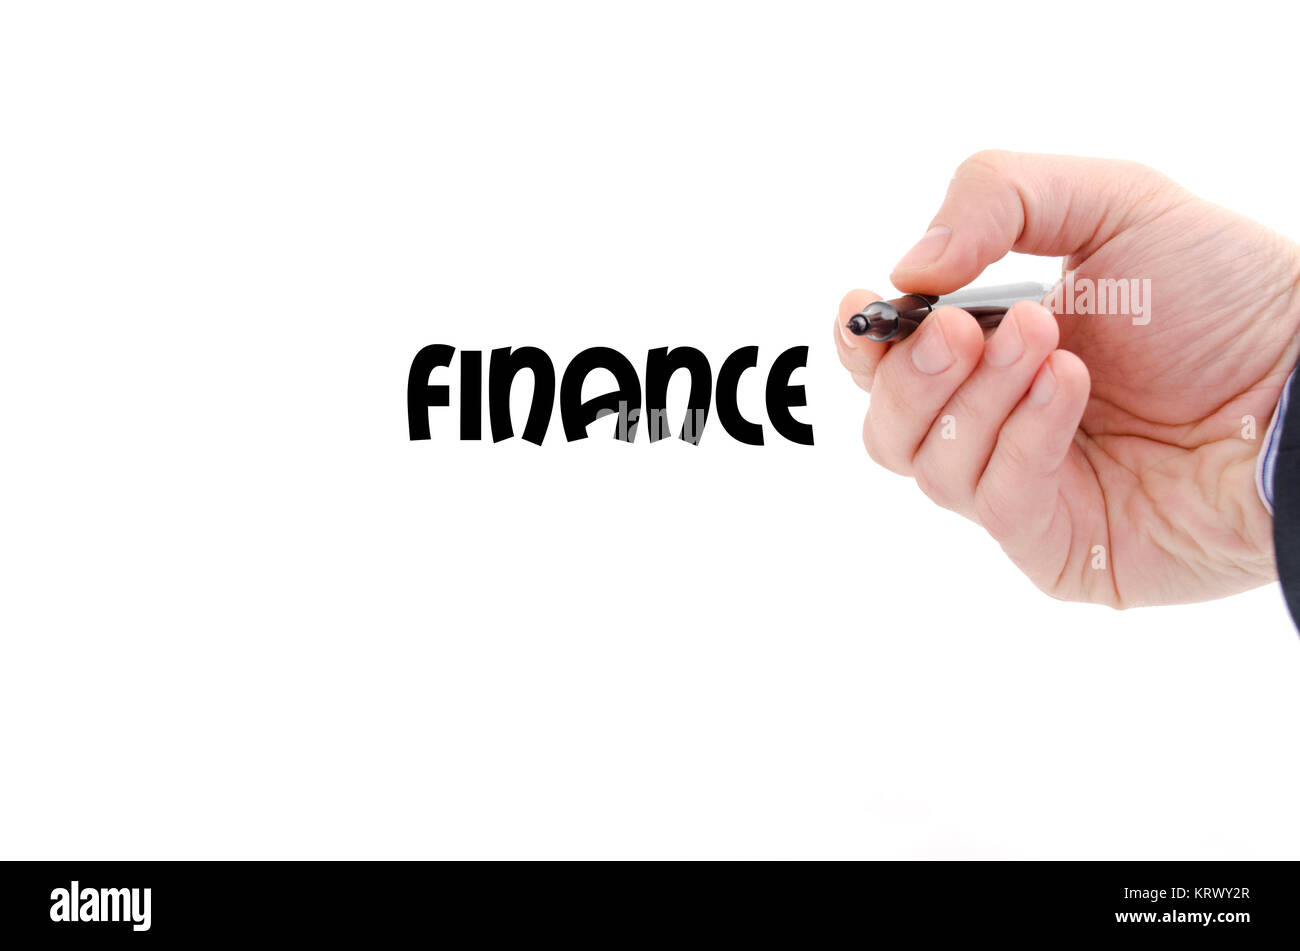 Finance text concept Stock Photo